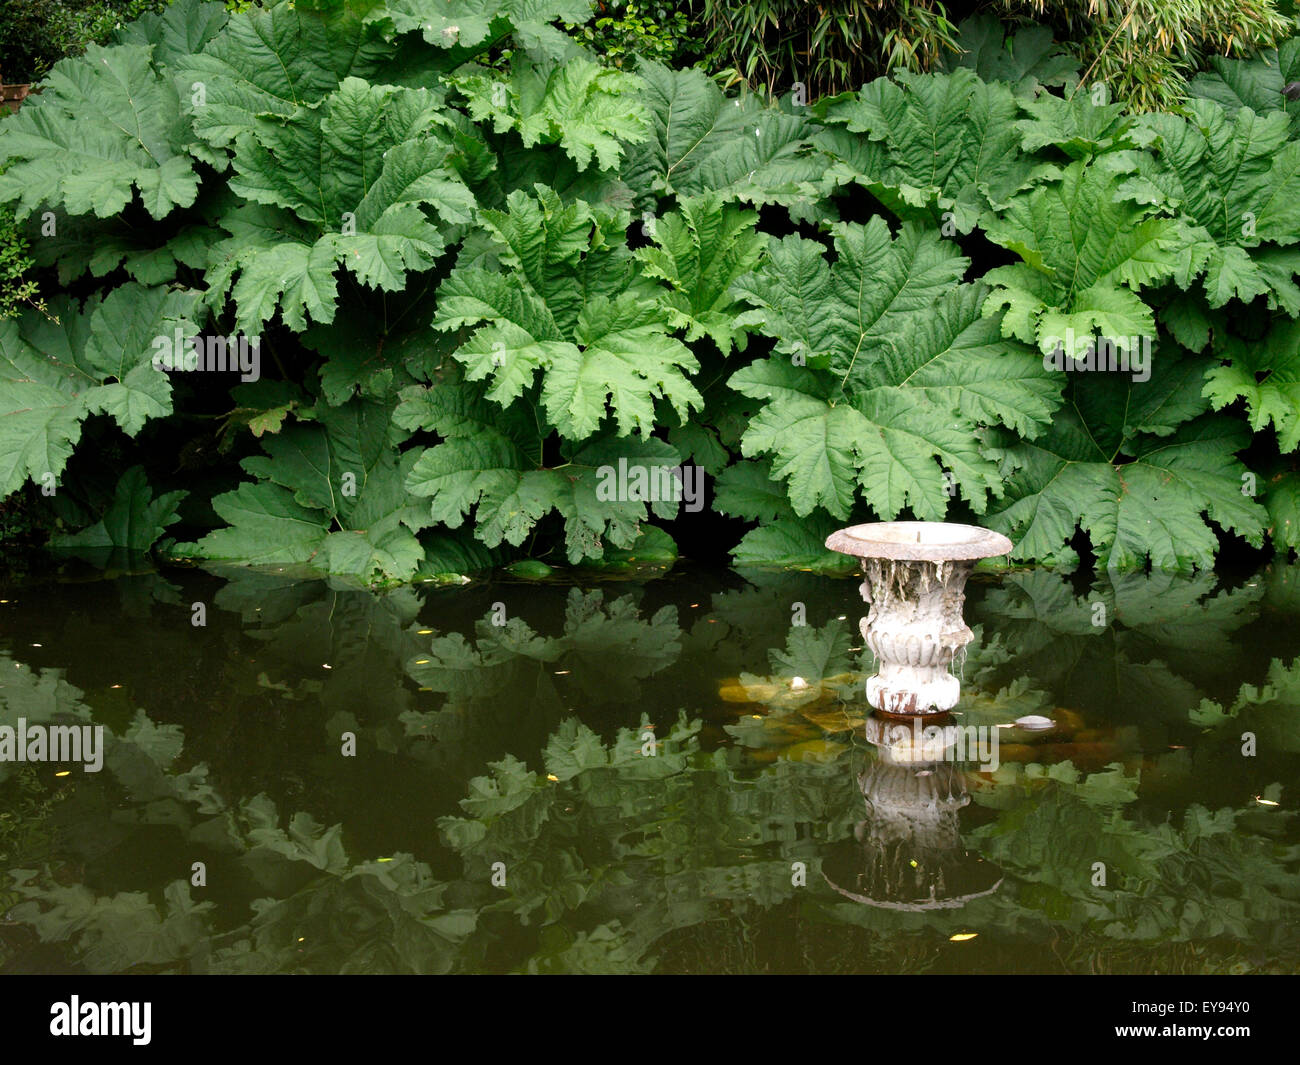 Gunnera manicata Gunnera tinctoria, rhubarbe géante - Géant, Gunnera, croissante autour d'un étang ornemental, Shaldon, Devon, UK Banque D'Images